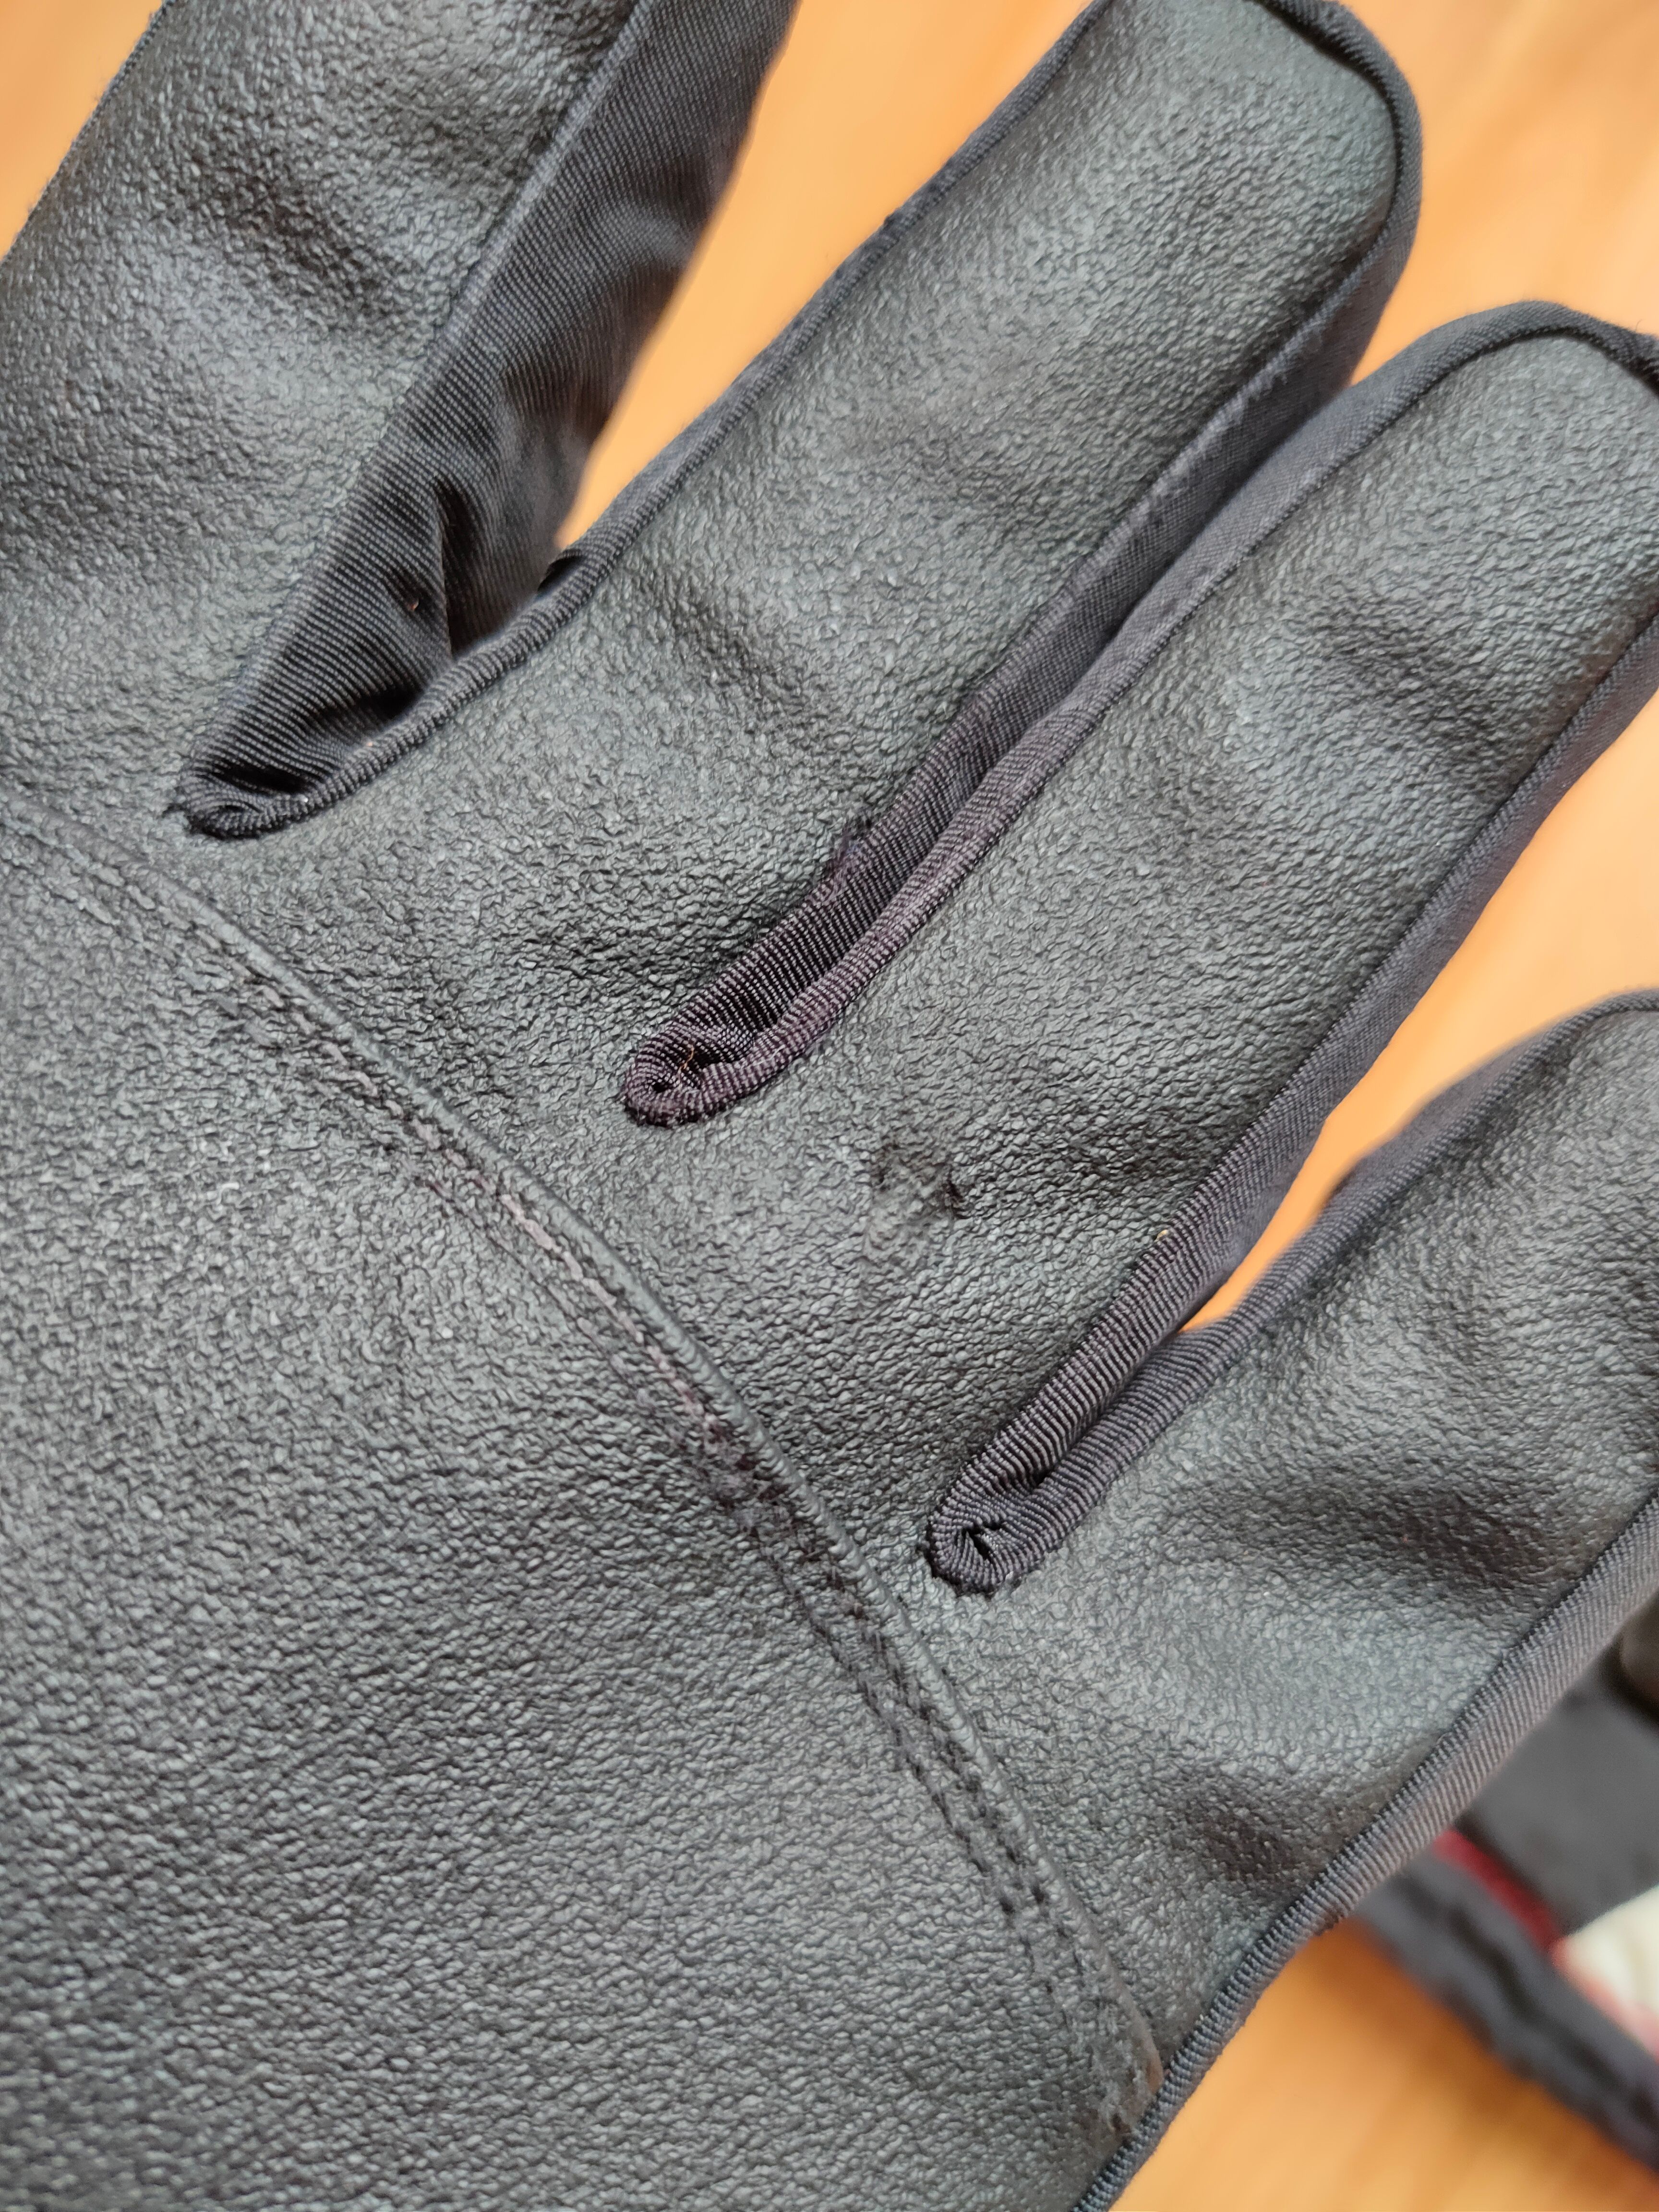 Ski Vintage Ziener Goretex Gloves Gorpcore Outdoor Ski Gloves Size ONE SIZE - 11 Preview